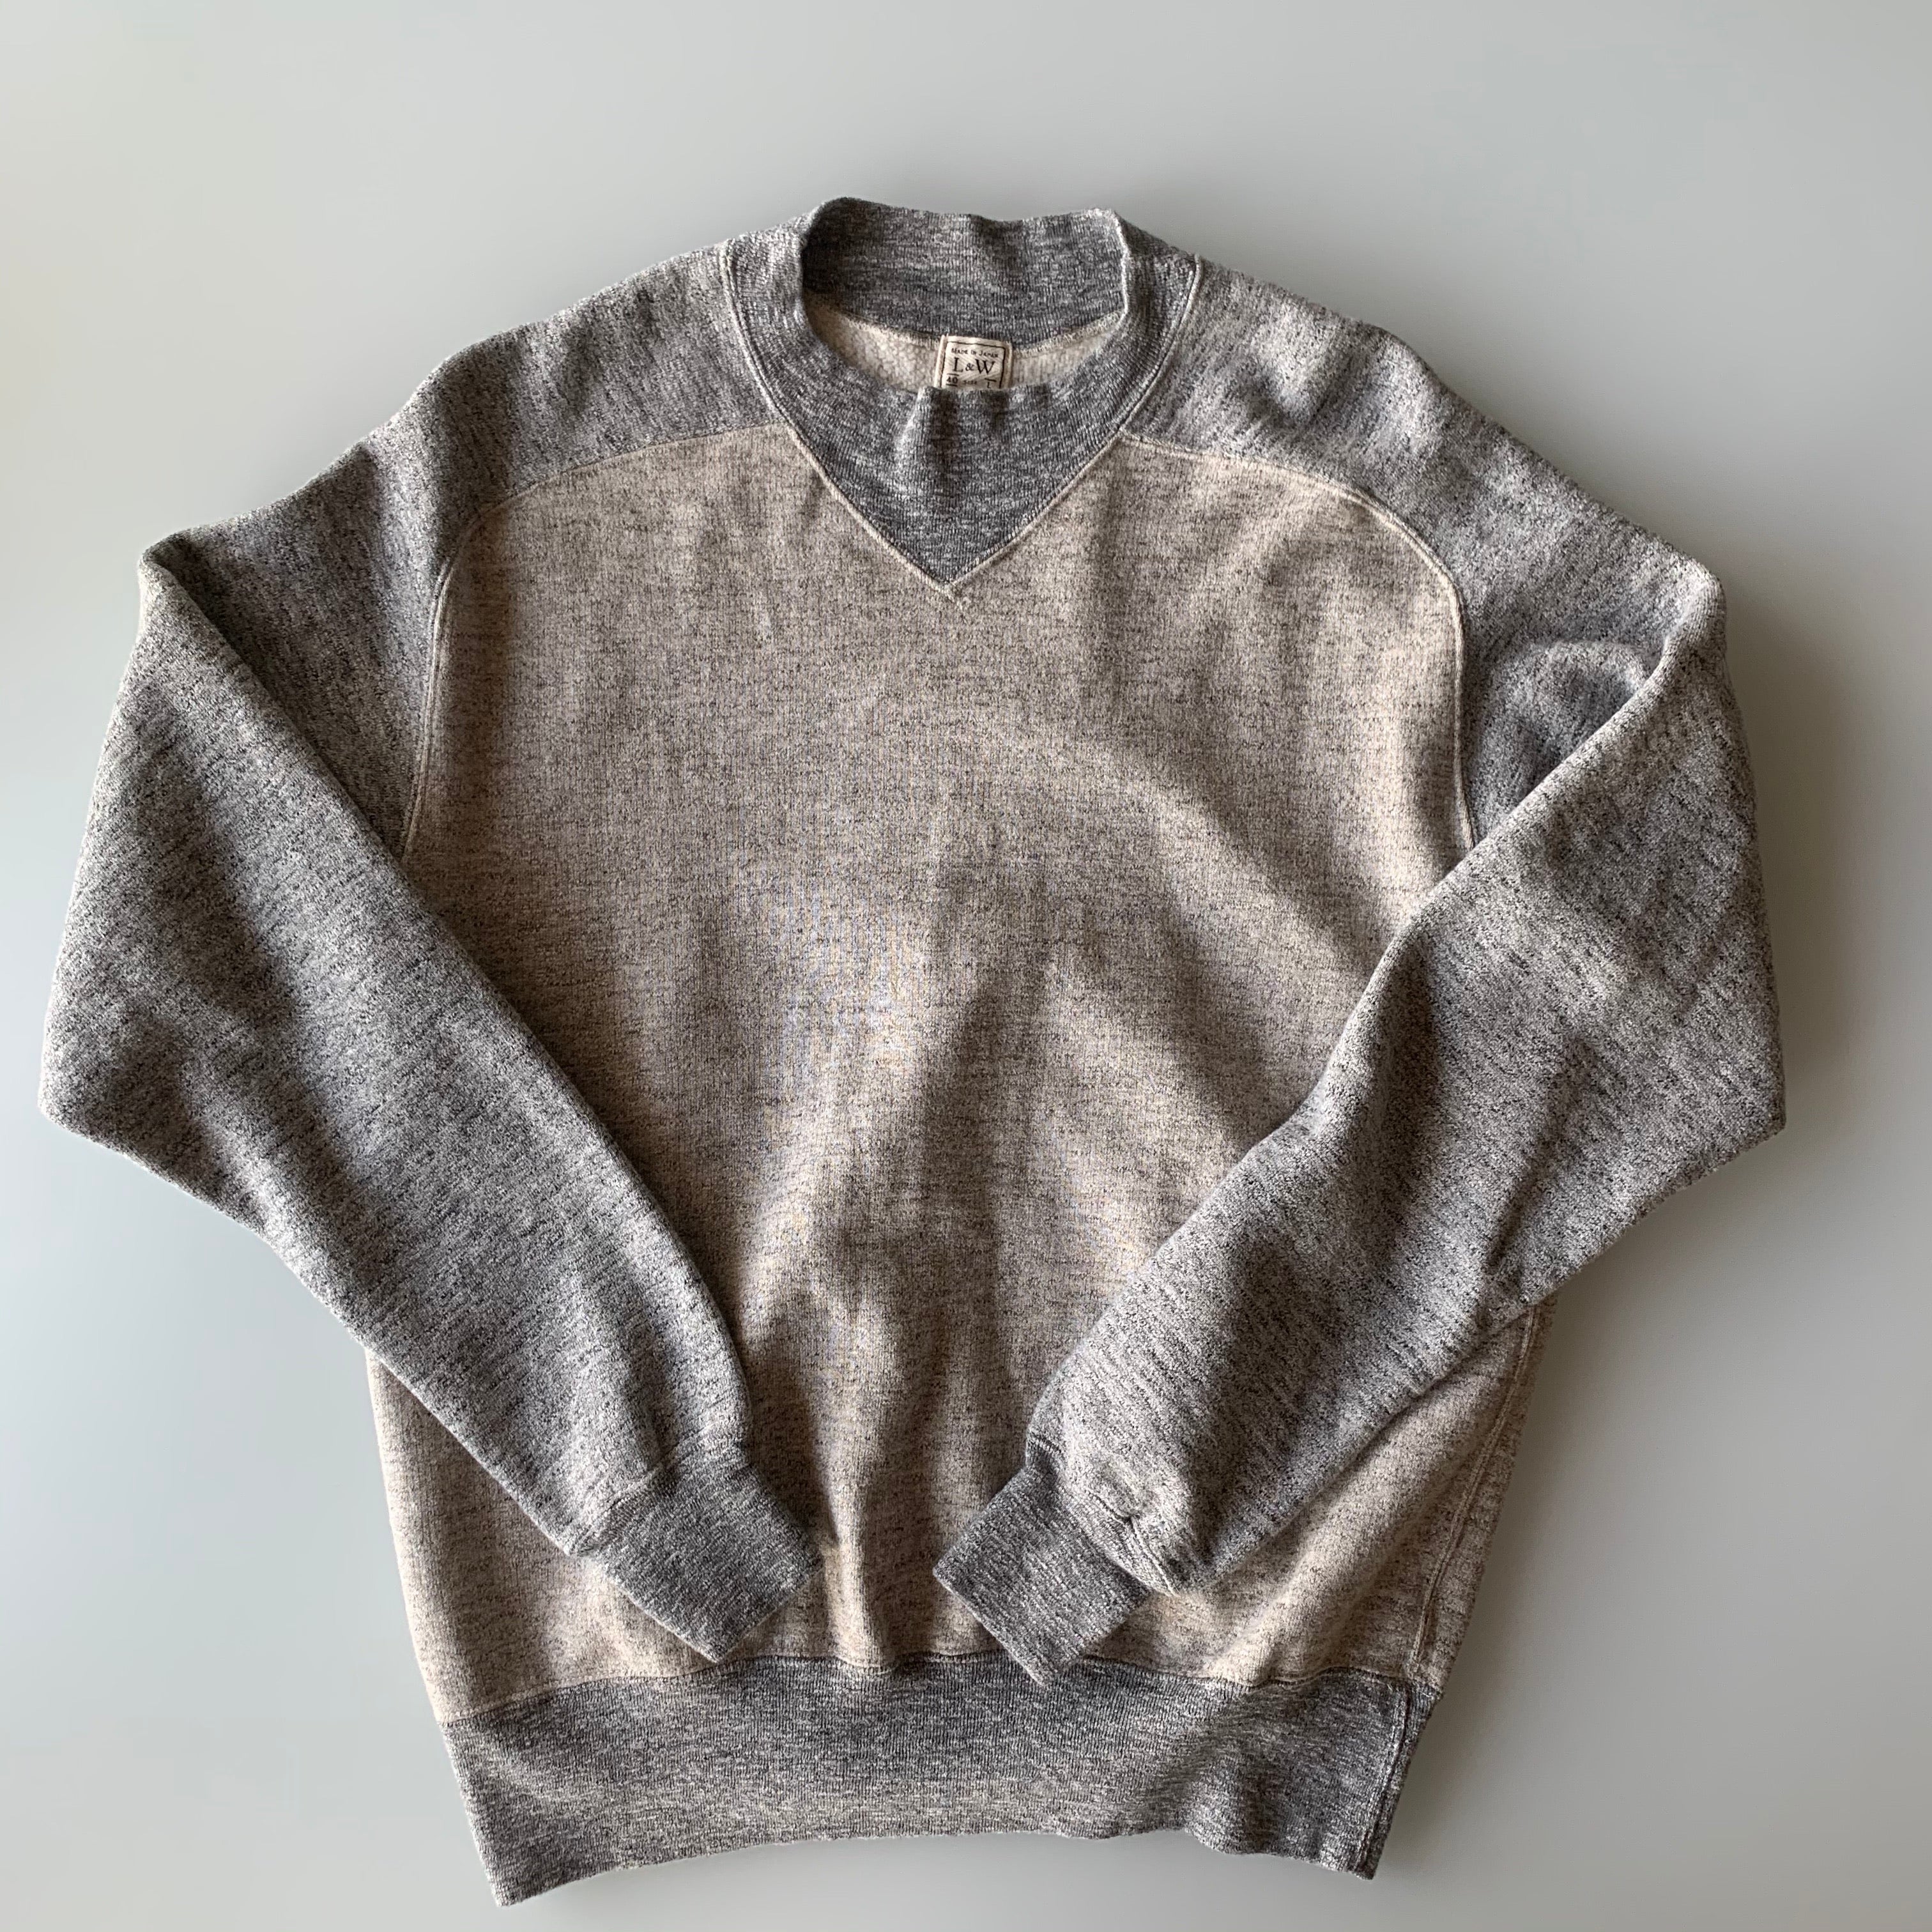 Vintage Slub Cotton 1930's Raglan Sweatshirt in Heather Brown x Heather Grey